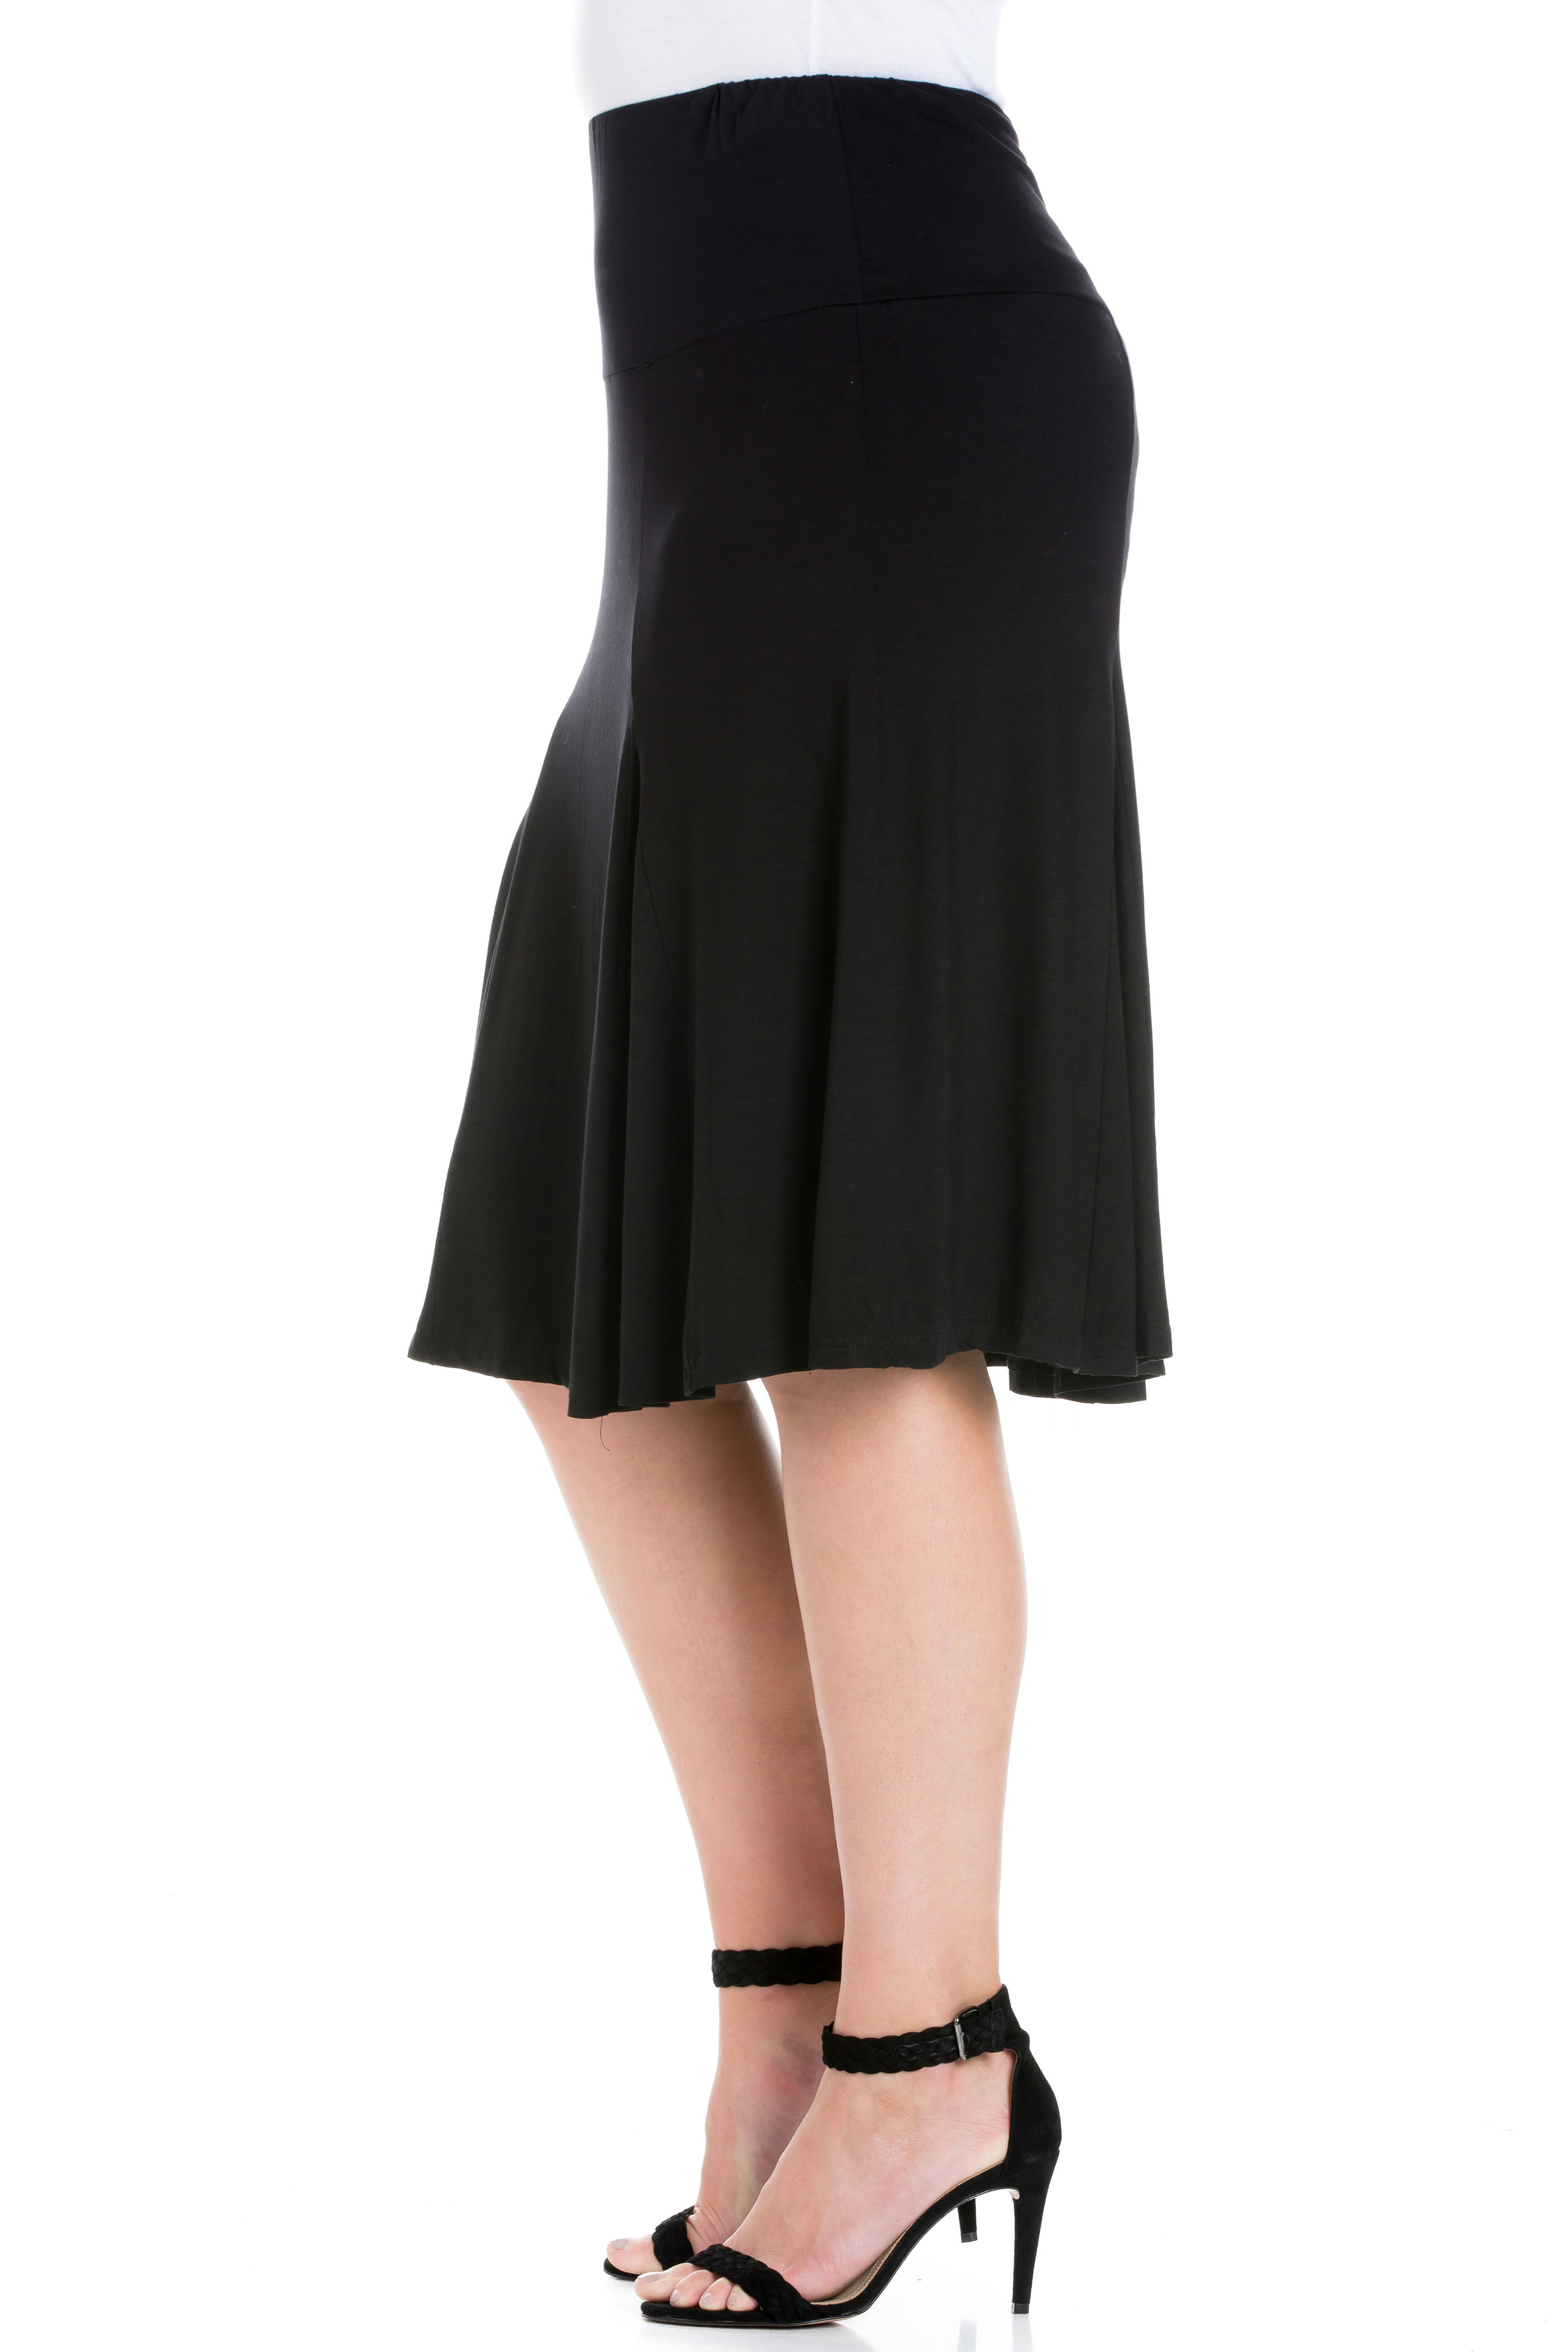 24seven Comfort Apparel Plus Size Women's Calf-Length Skirt